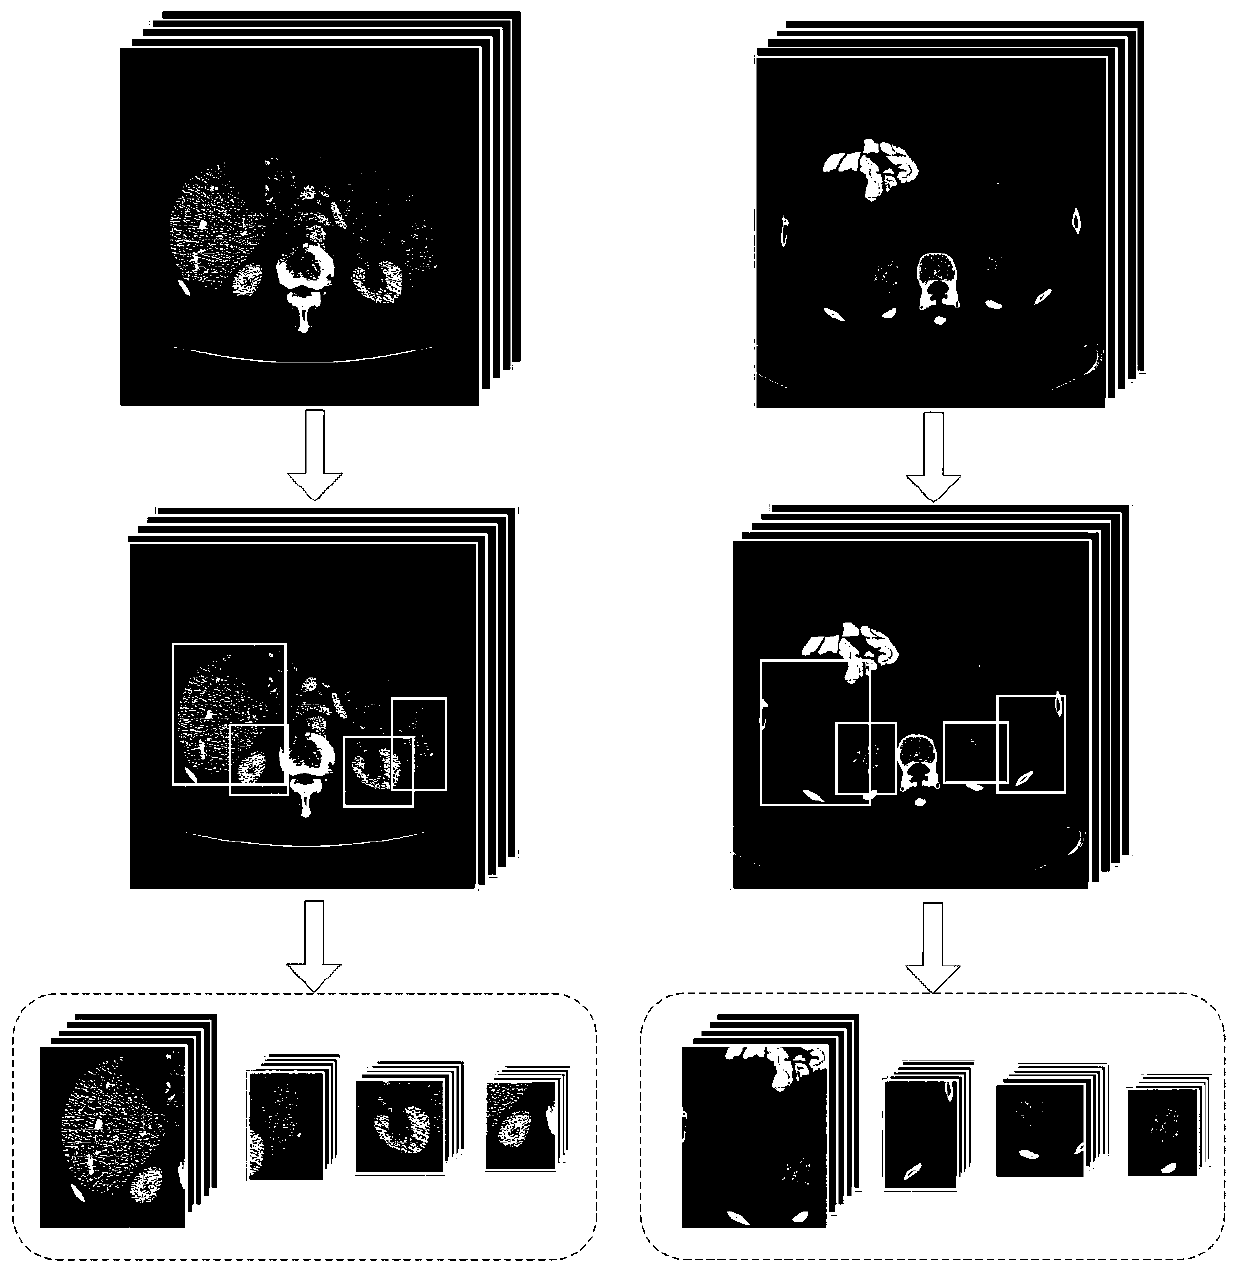 Abdominal CT image target organ registration method based on deep learning